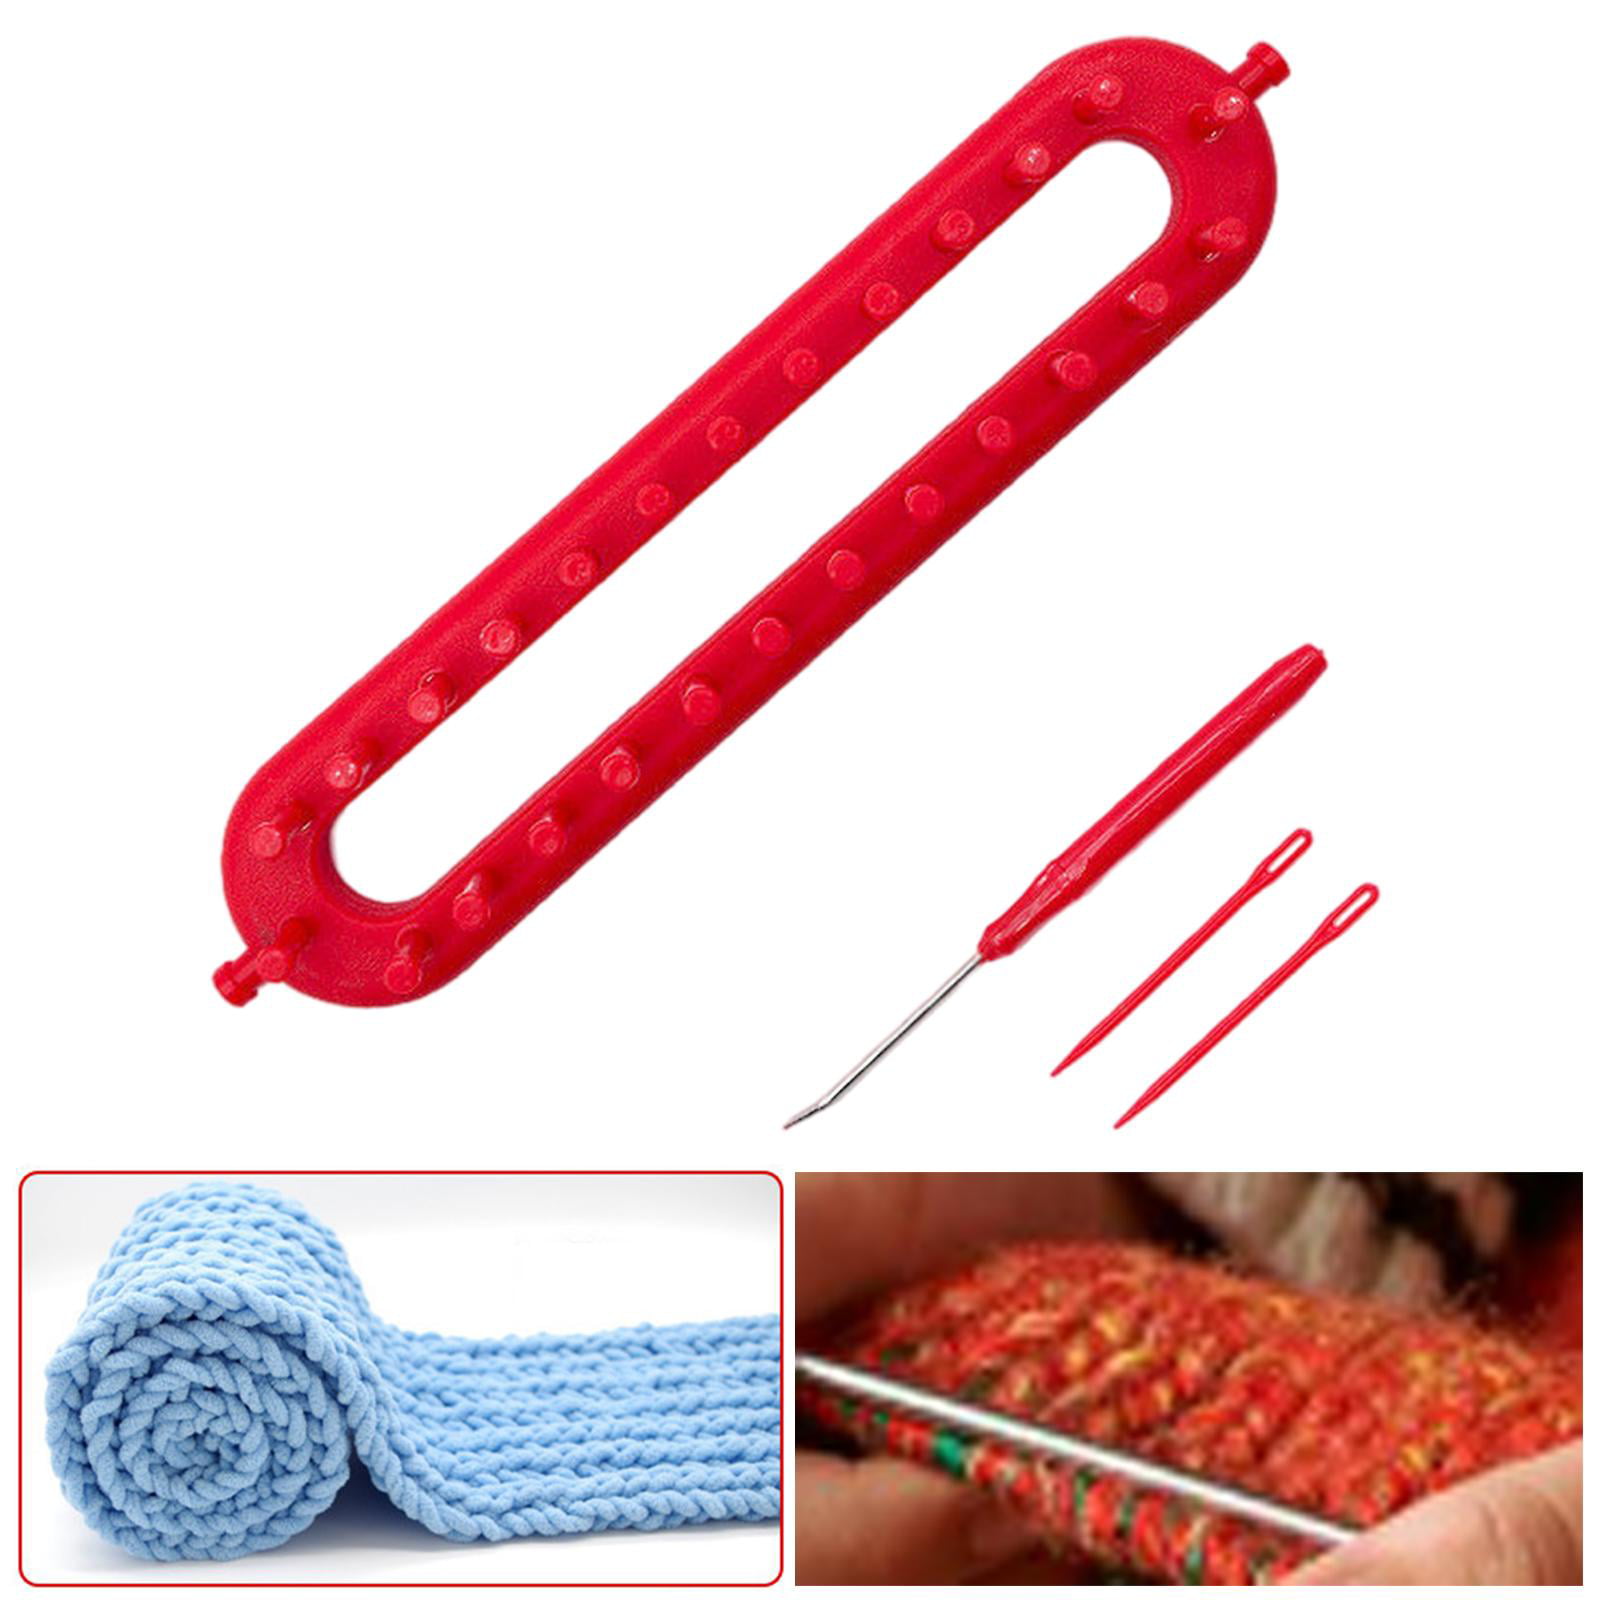 Nisorpa Knitting Machine 48 Needles, Hand Weaver Loom with Row